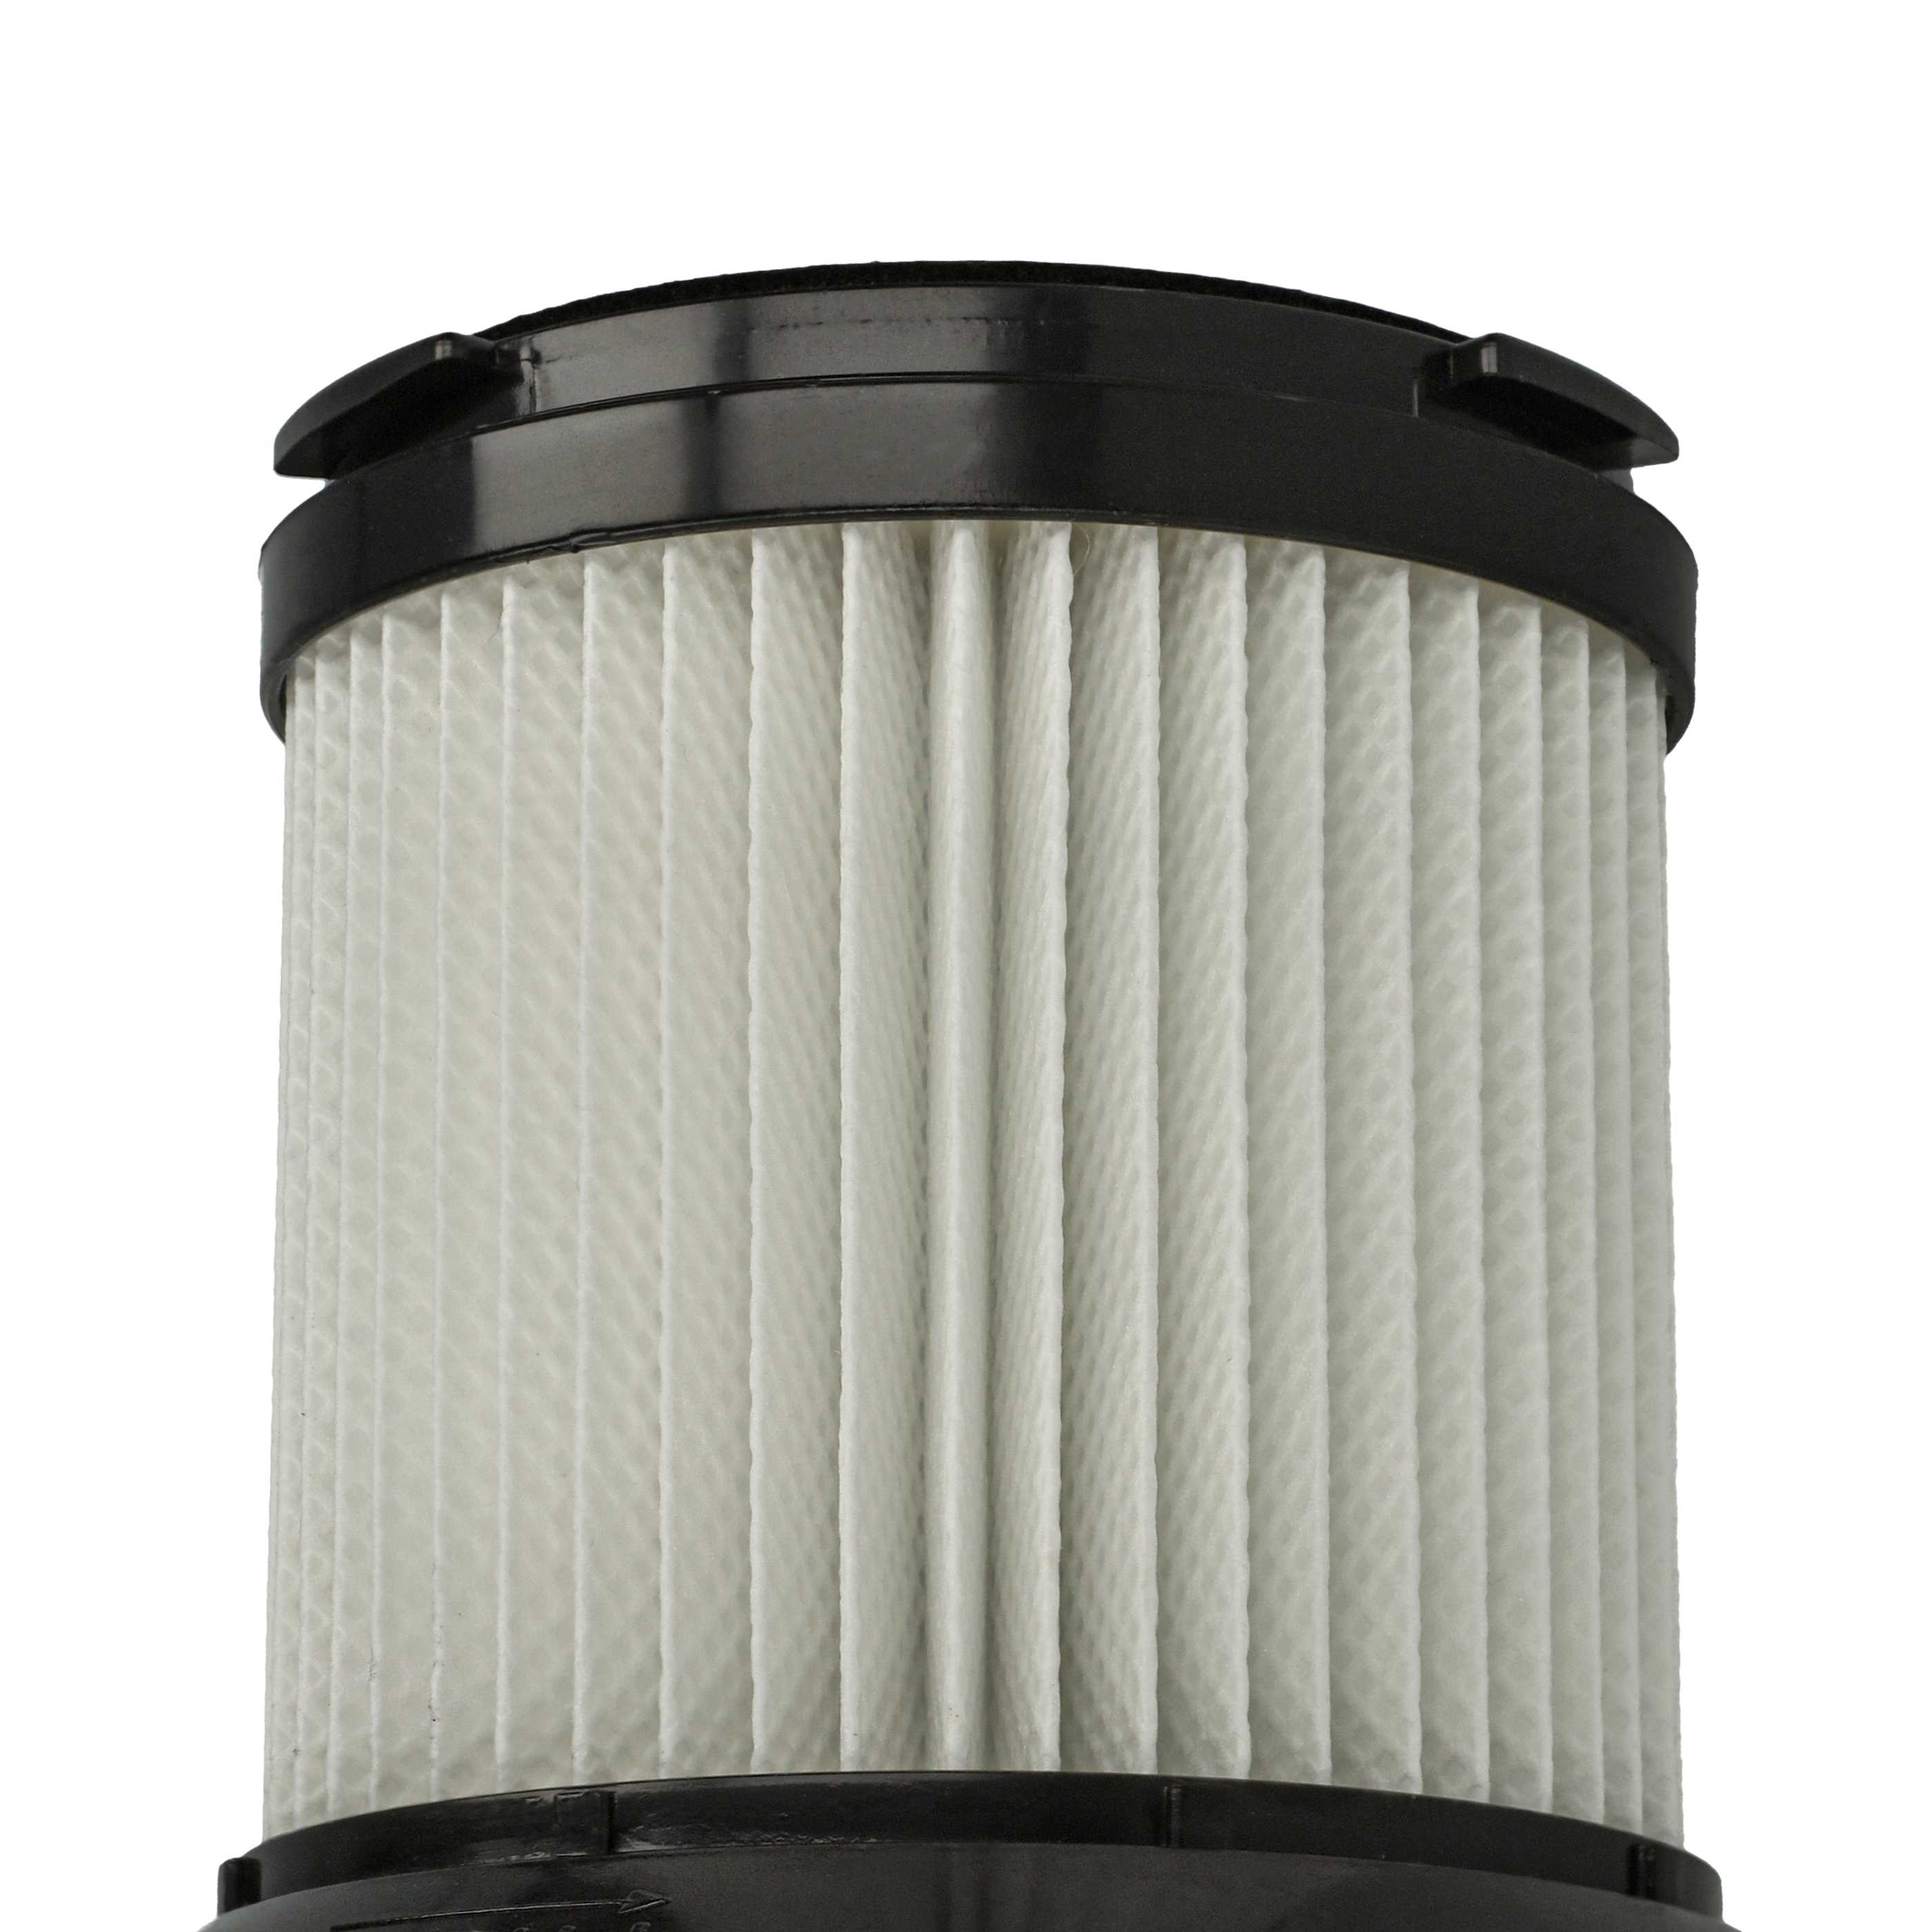 2x Filtro para aspiradora Sichler Zyklon BLS-200 - filtro Hepa negro / blanco